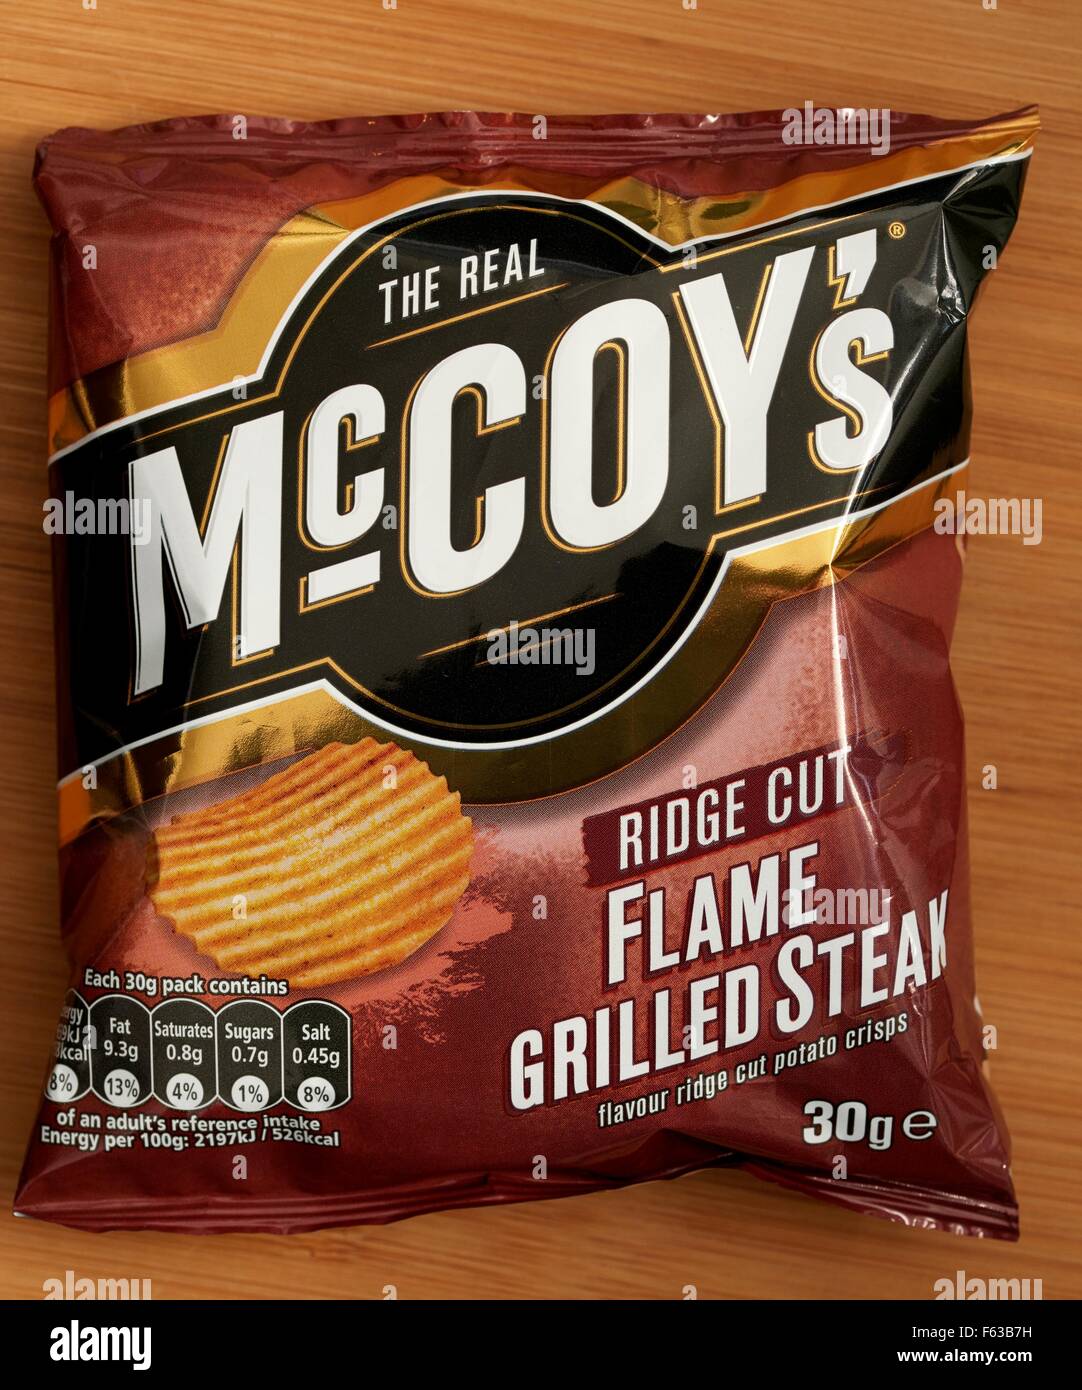 The real Mccoys ridge cut flame grilled steak potato crisps Stock Photo -  Alamy